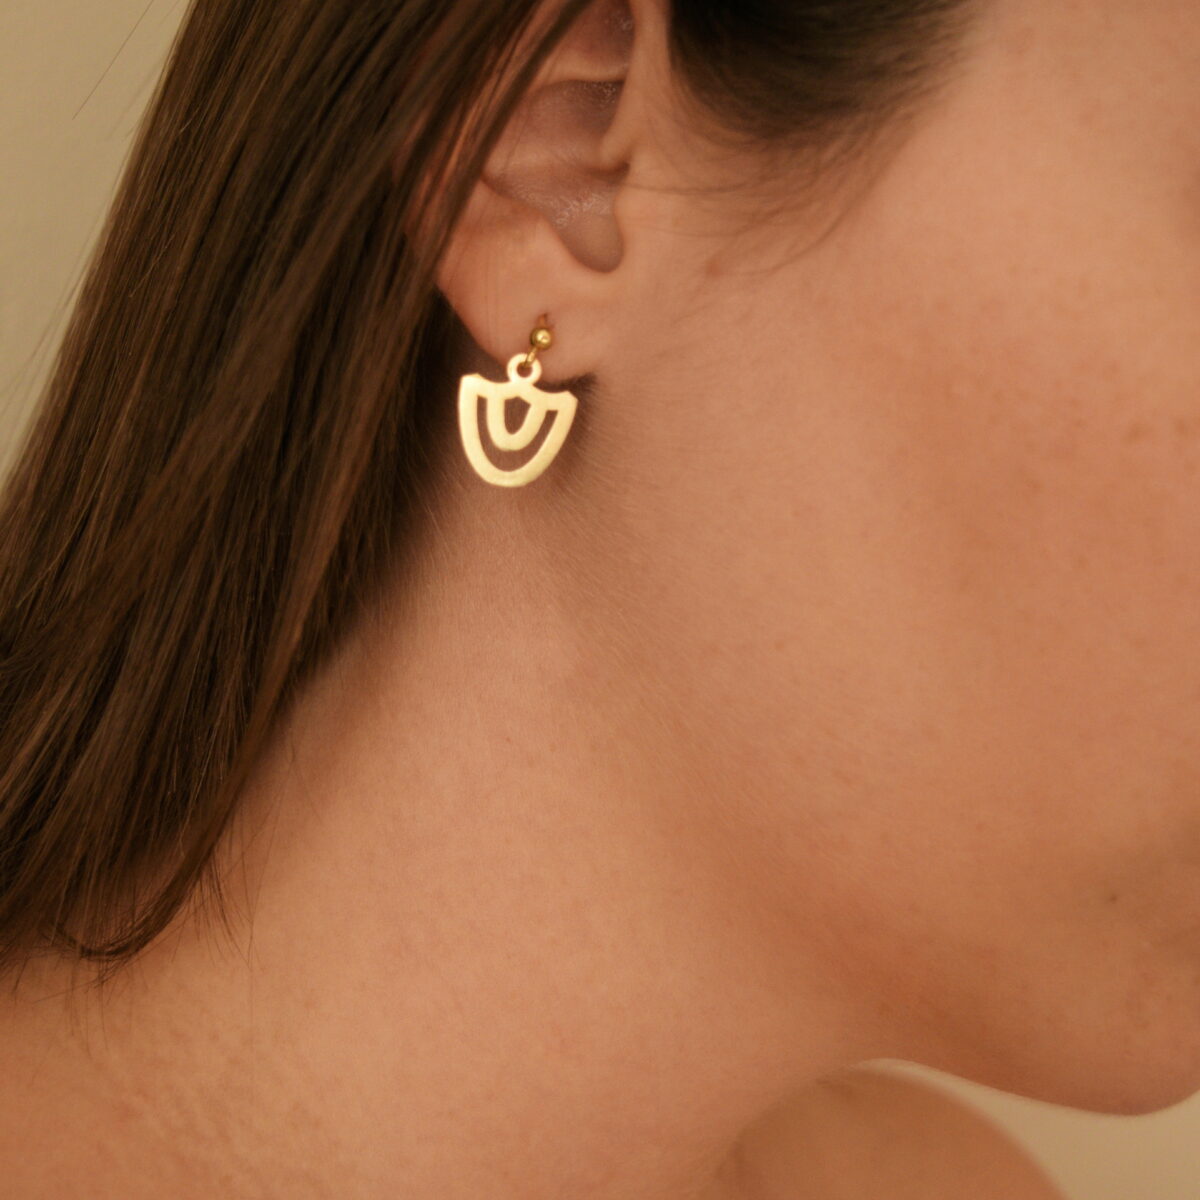 Tholos earrings II gold plated